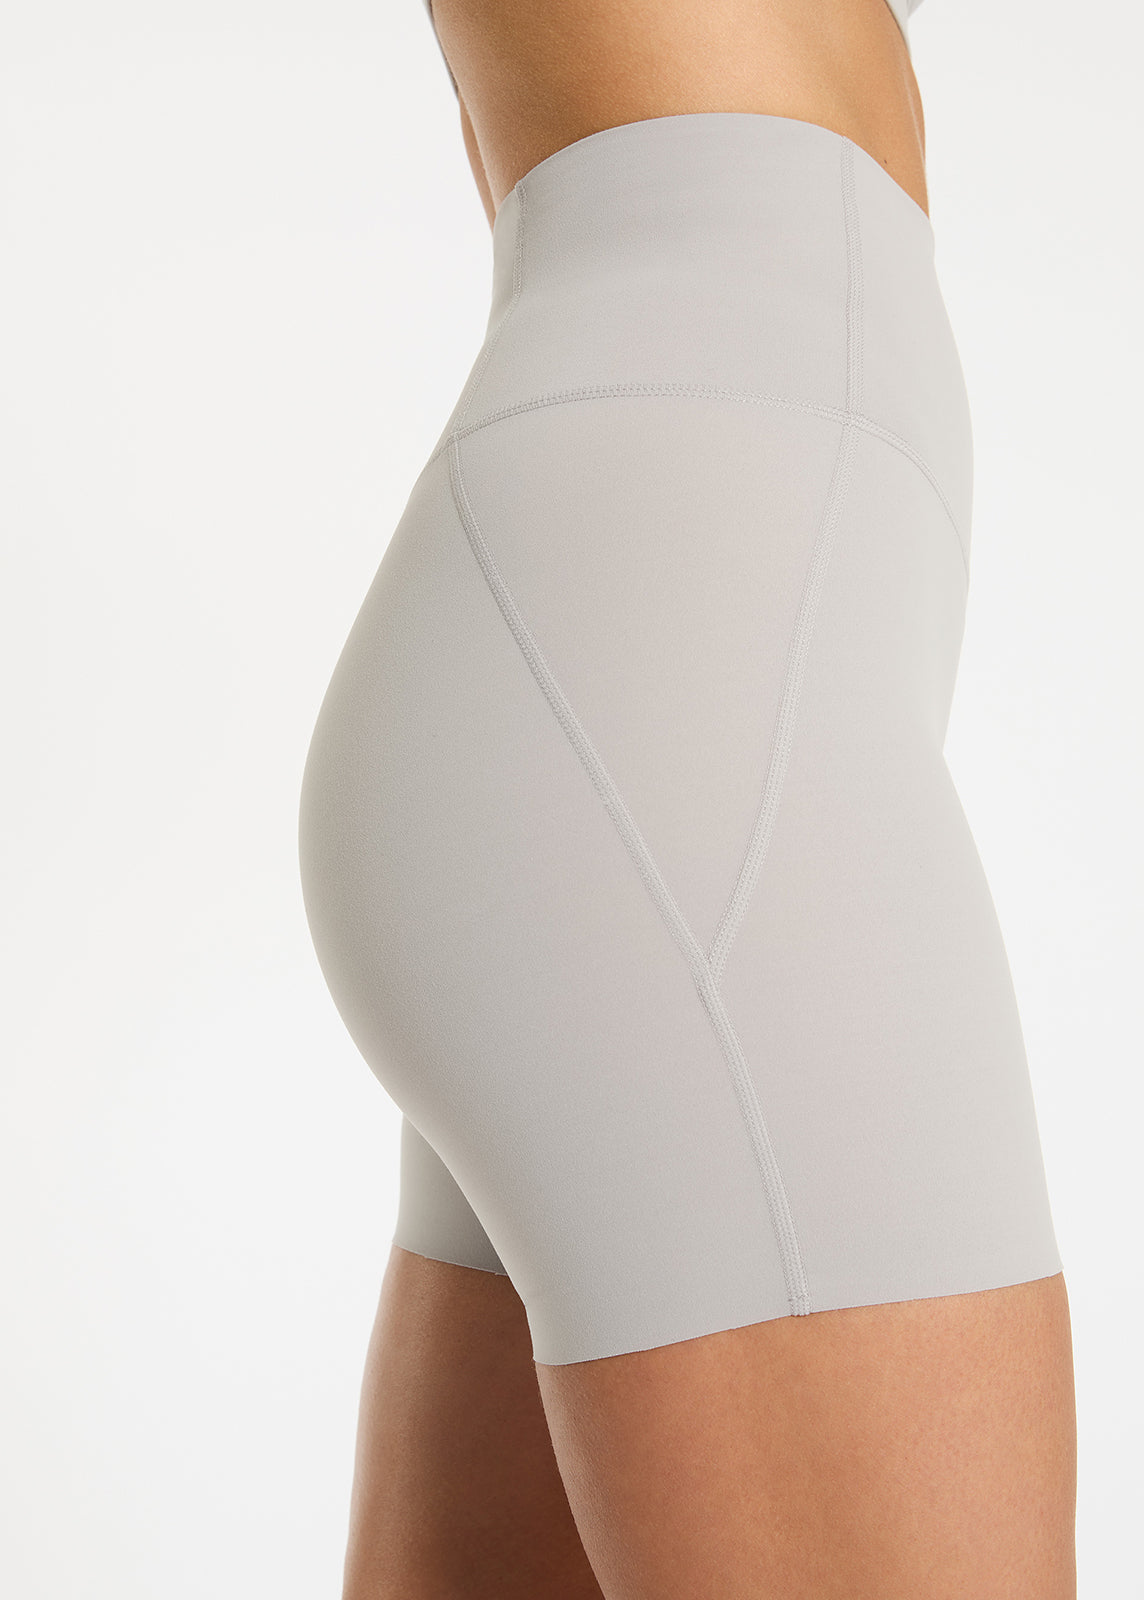 NIBESSER Gym Shorts for Women UK Seamless Cycling Short Shorts